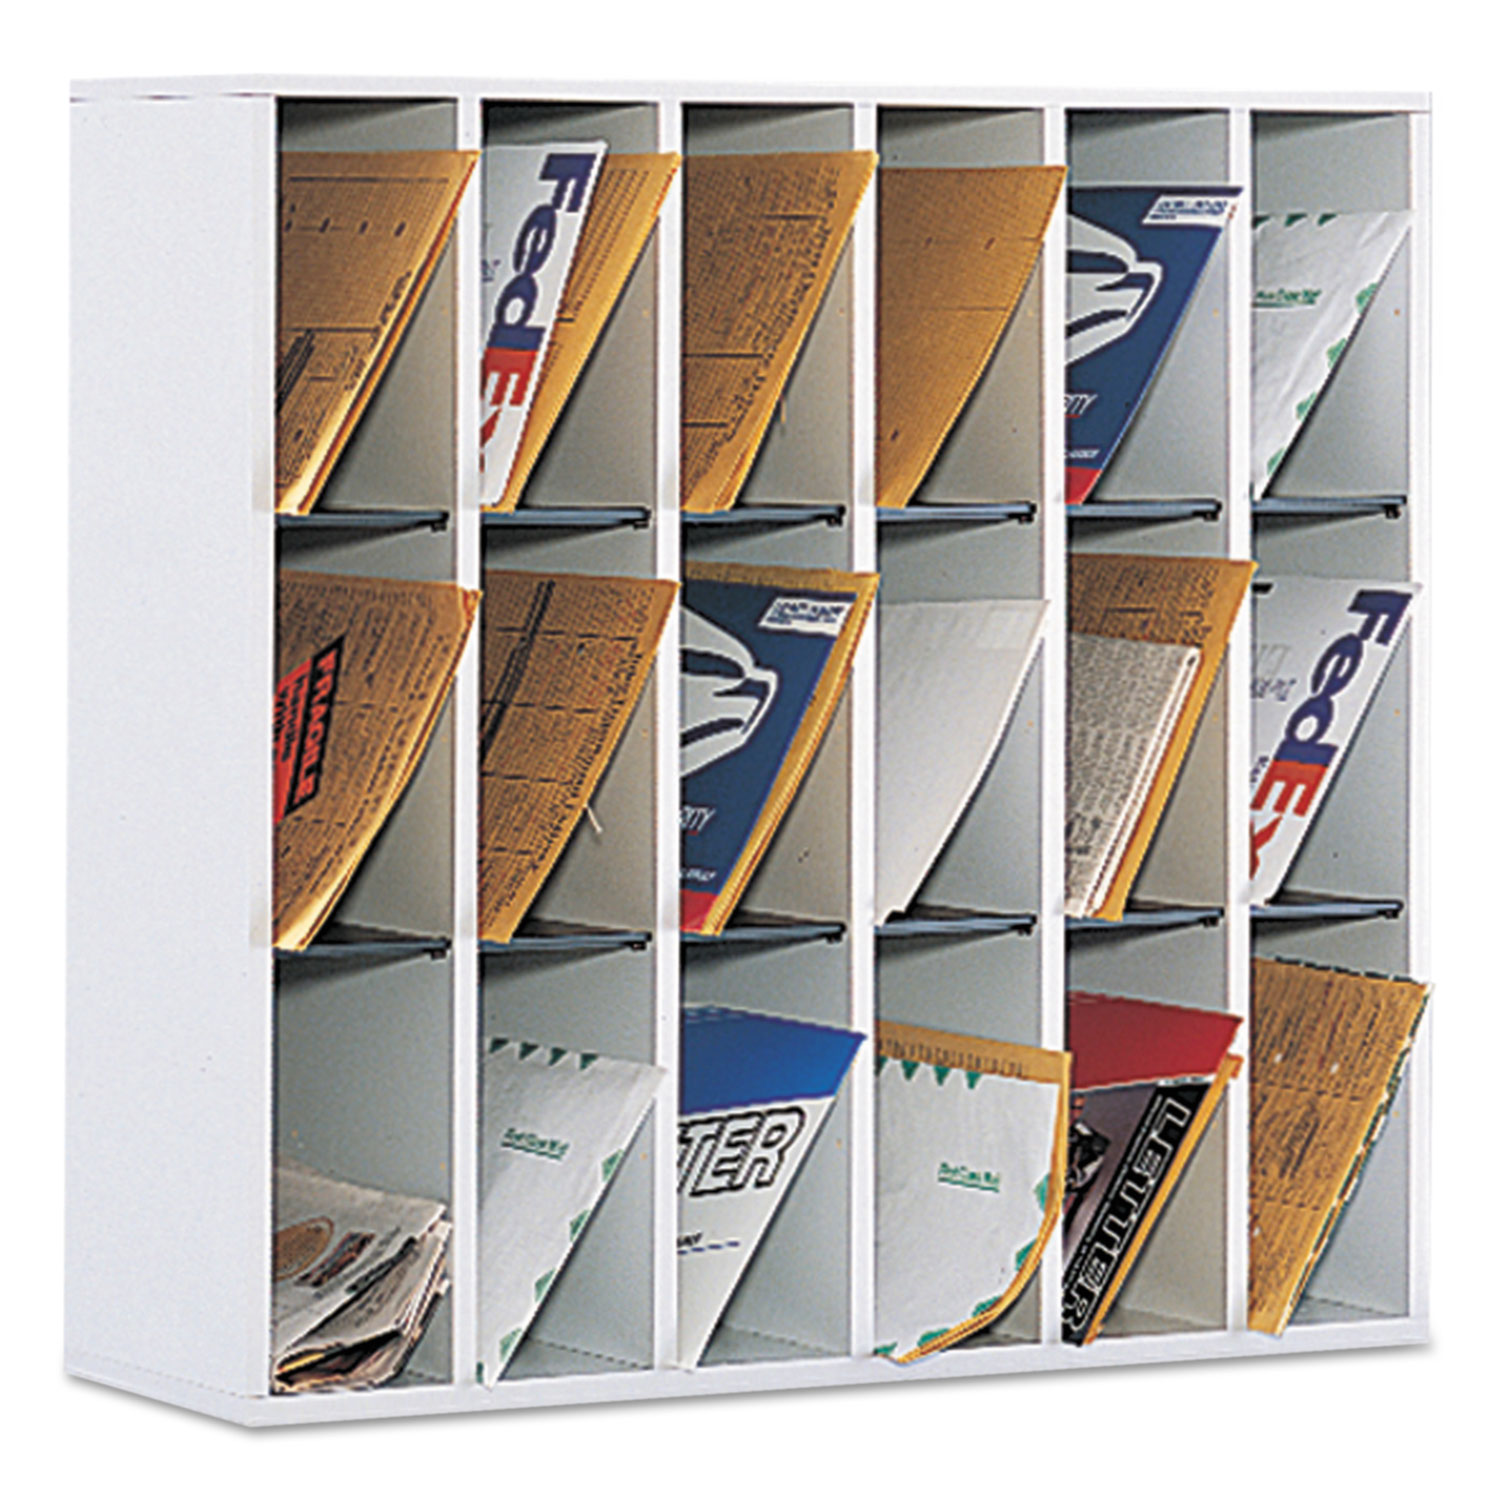  Safco 7765GR Wood Mail Sorter with Adjustable Dividers, Stackable, 18 Compartments, Gray (SAF7765GR) 